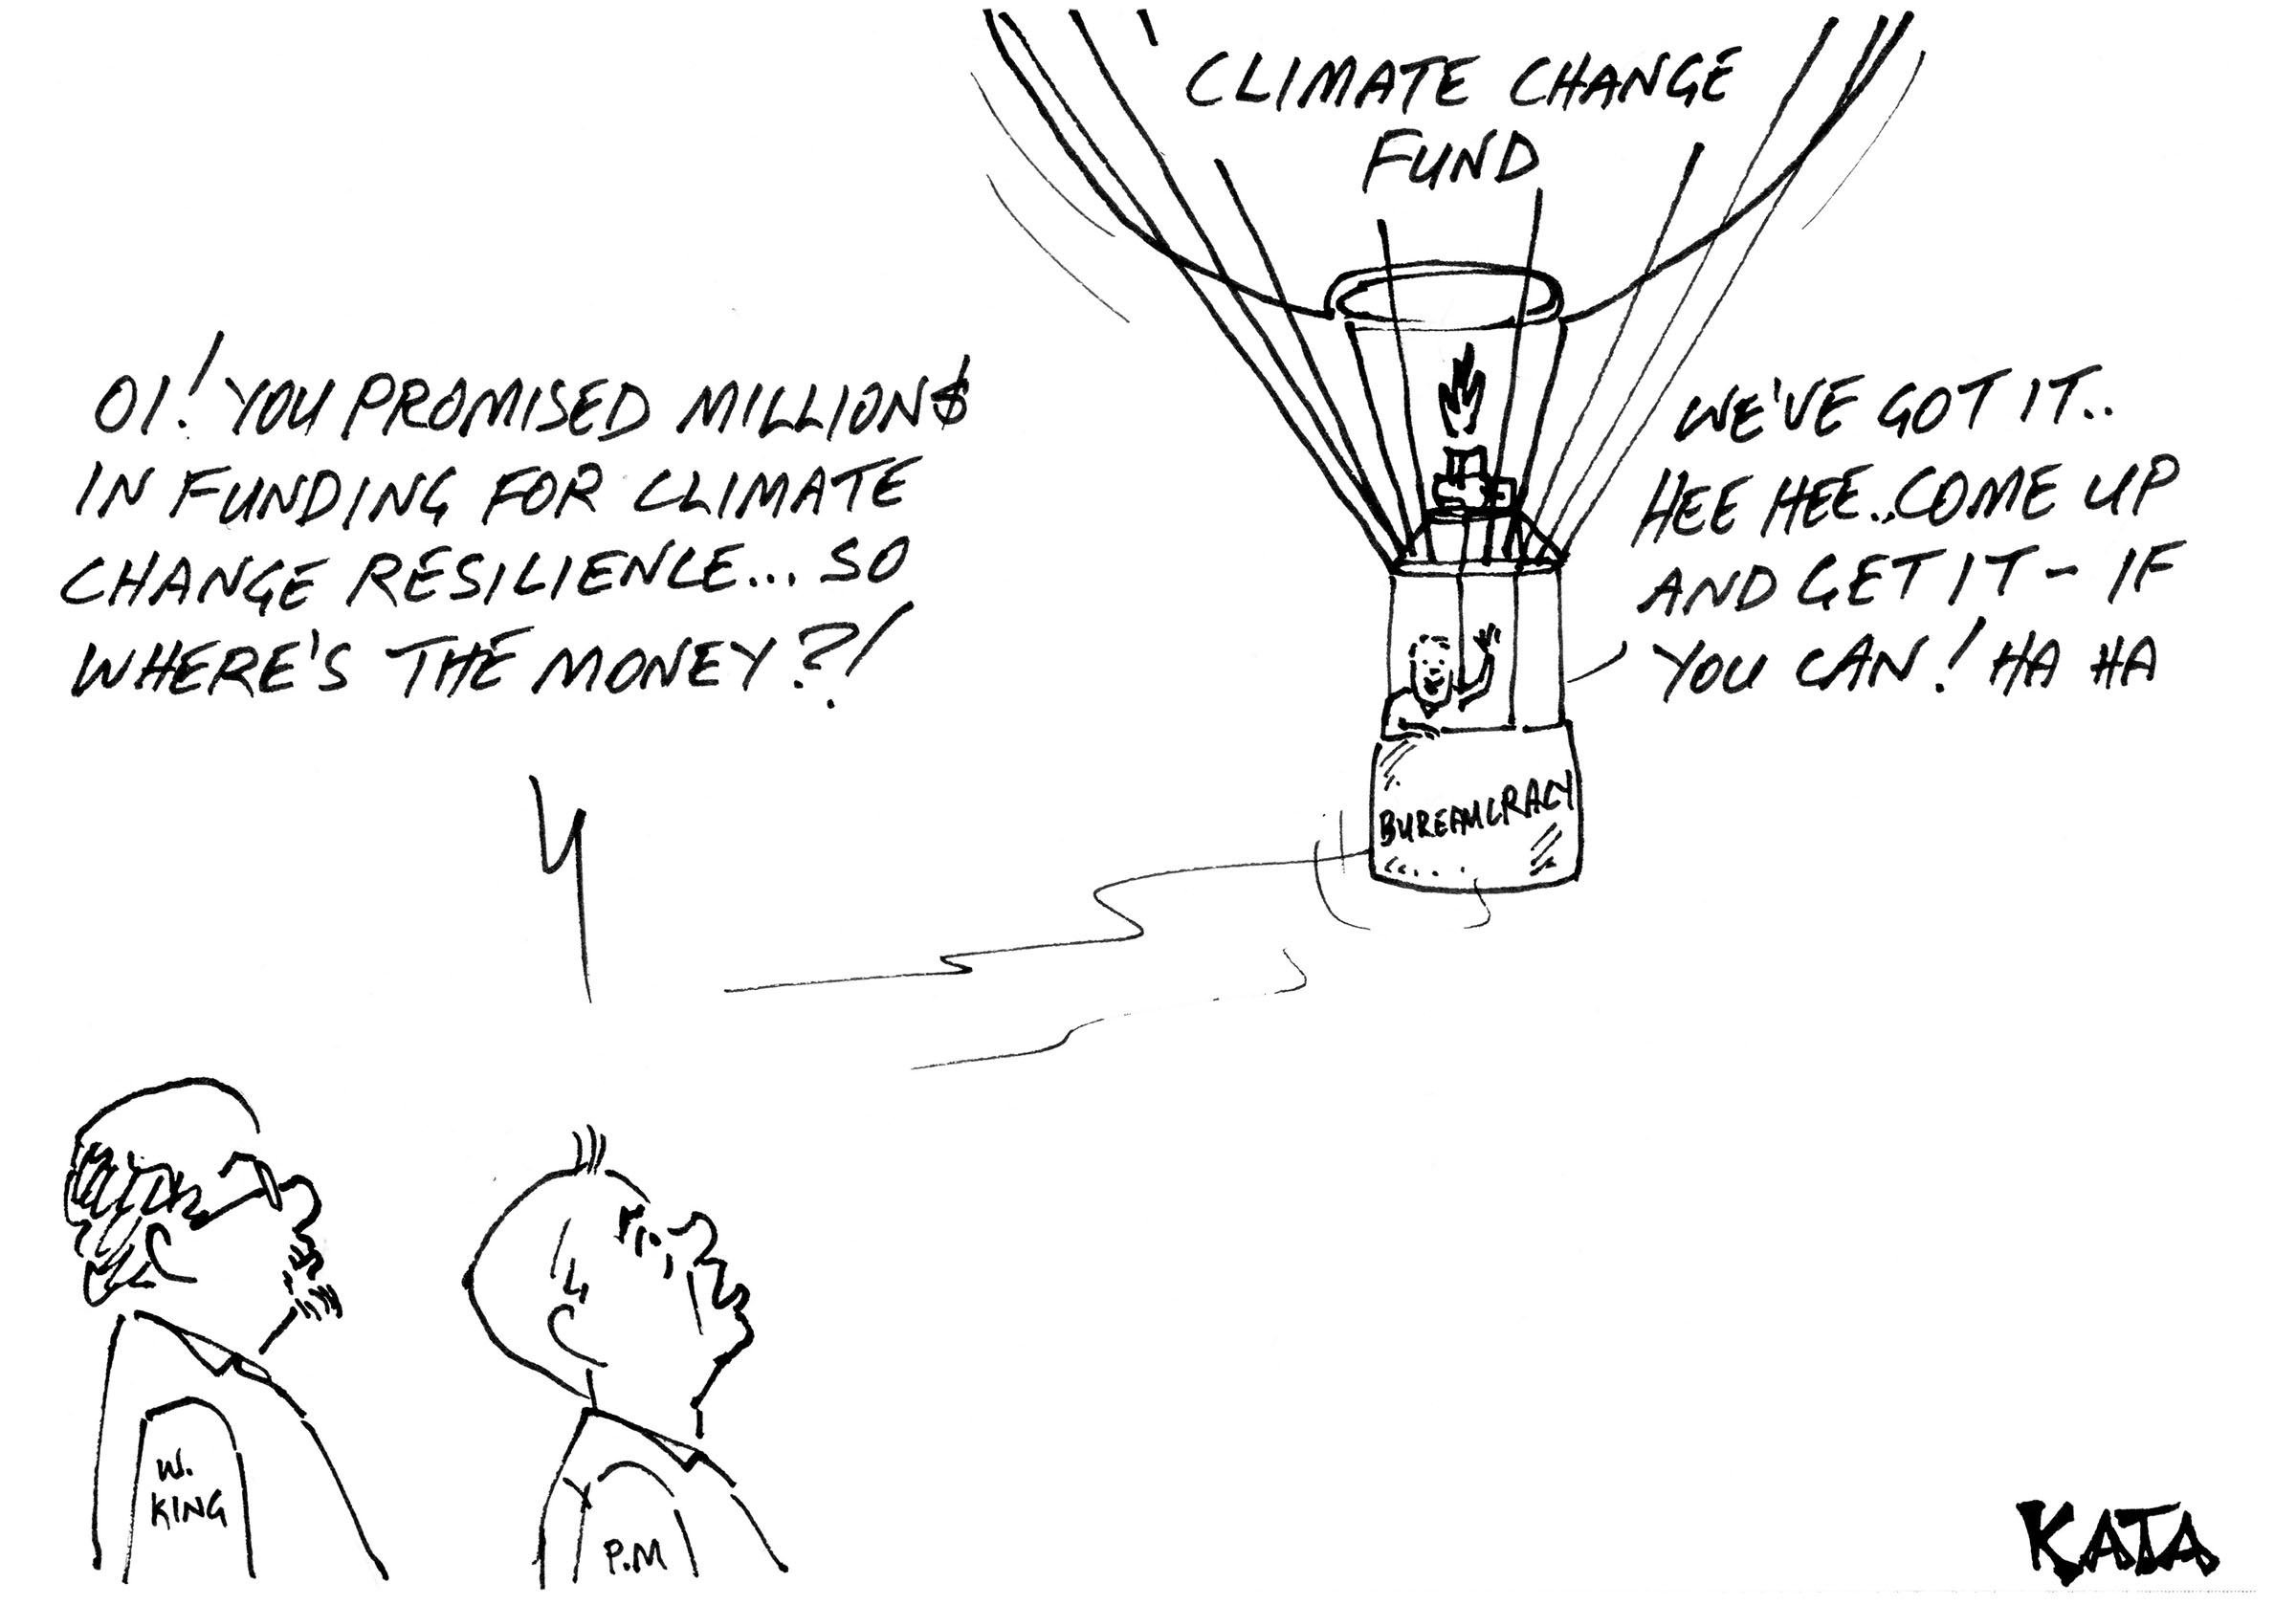 Kata:Climate change fund